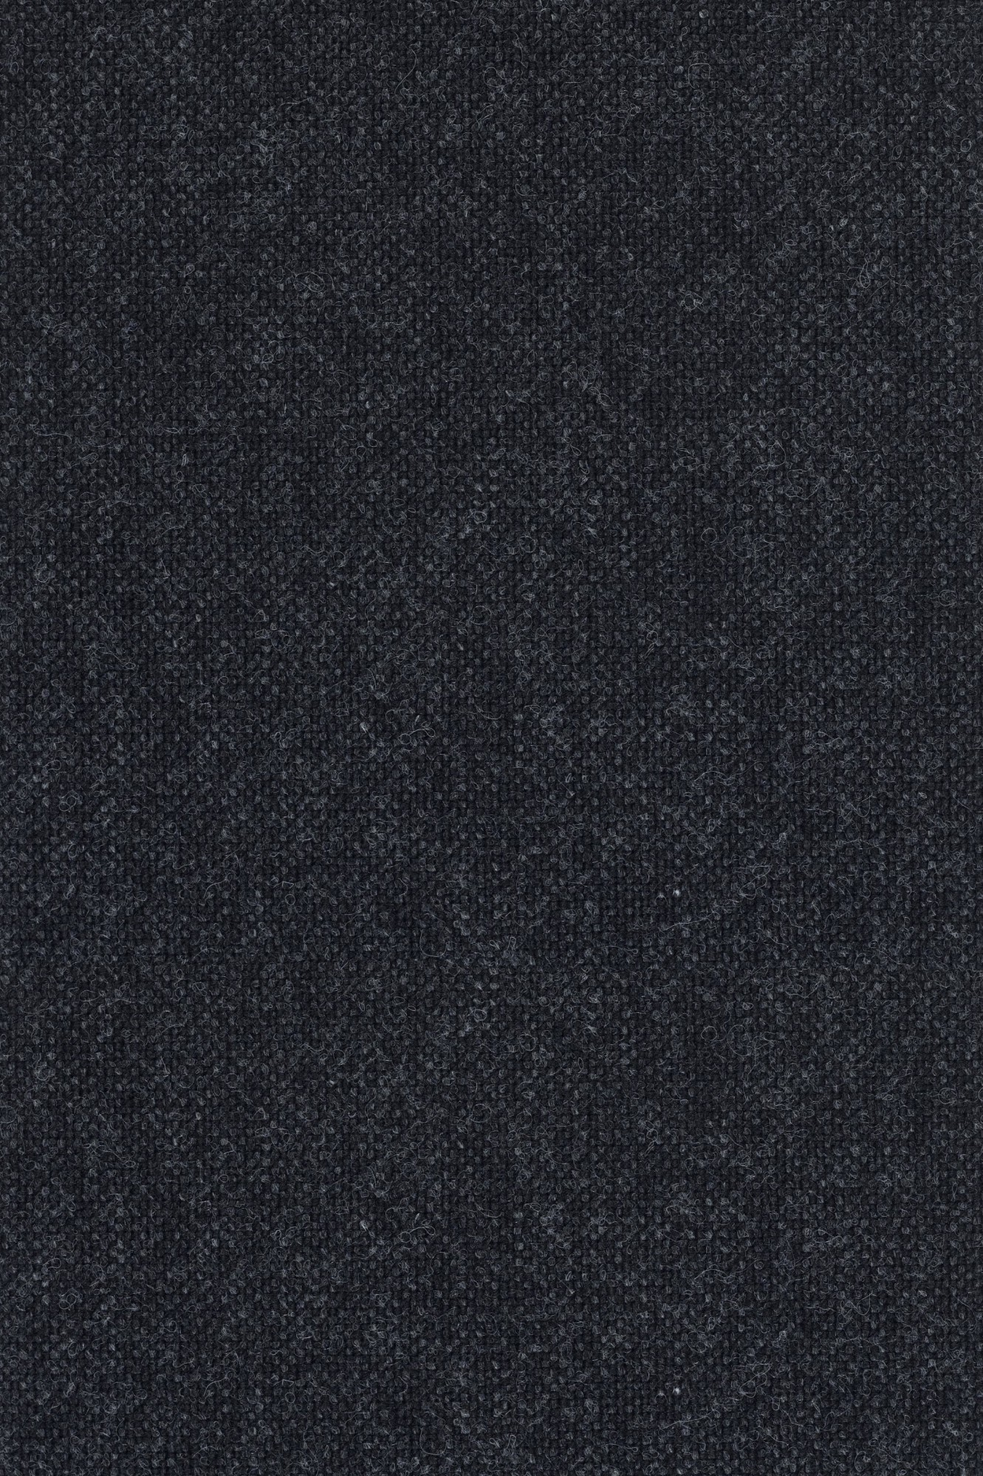 Fabric sample Hallingdal 65 180 grey